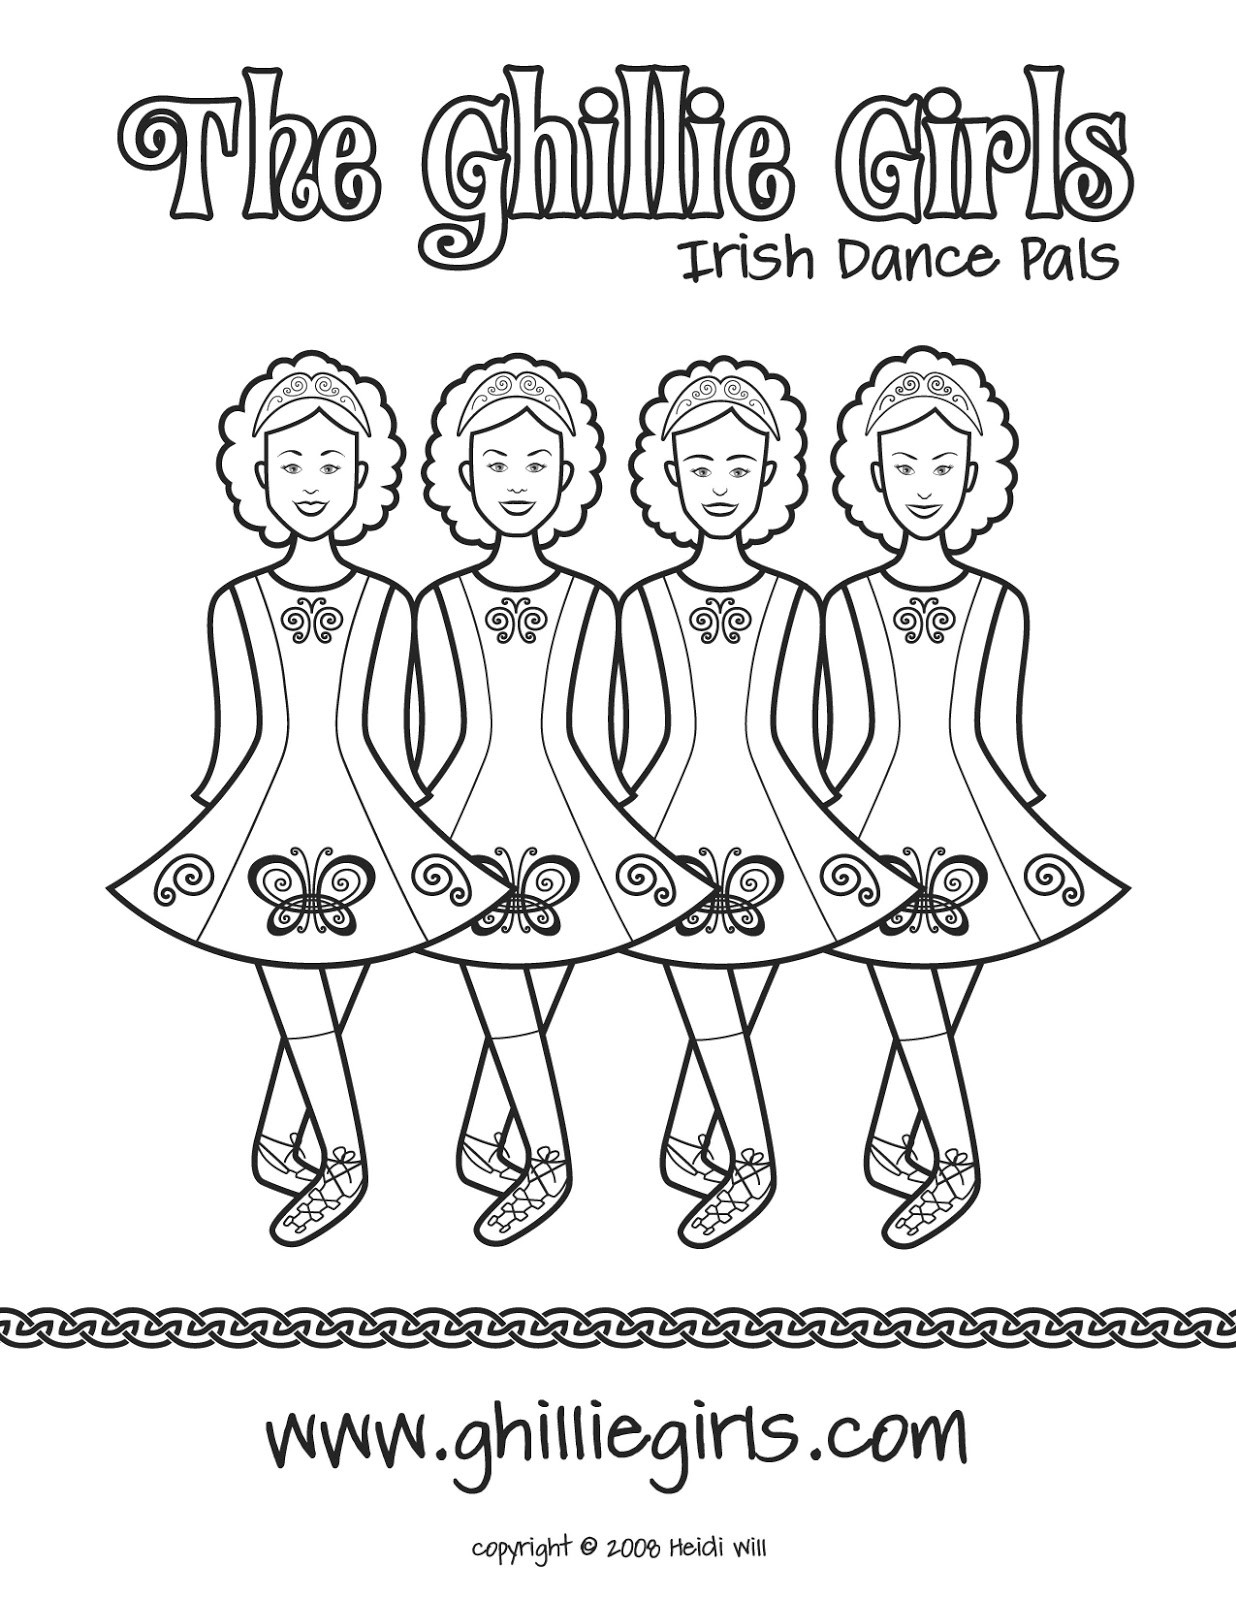 Irish Girl Coloring Pages
 Heidi Will The Ghillie Girls Irish Dance Pals